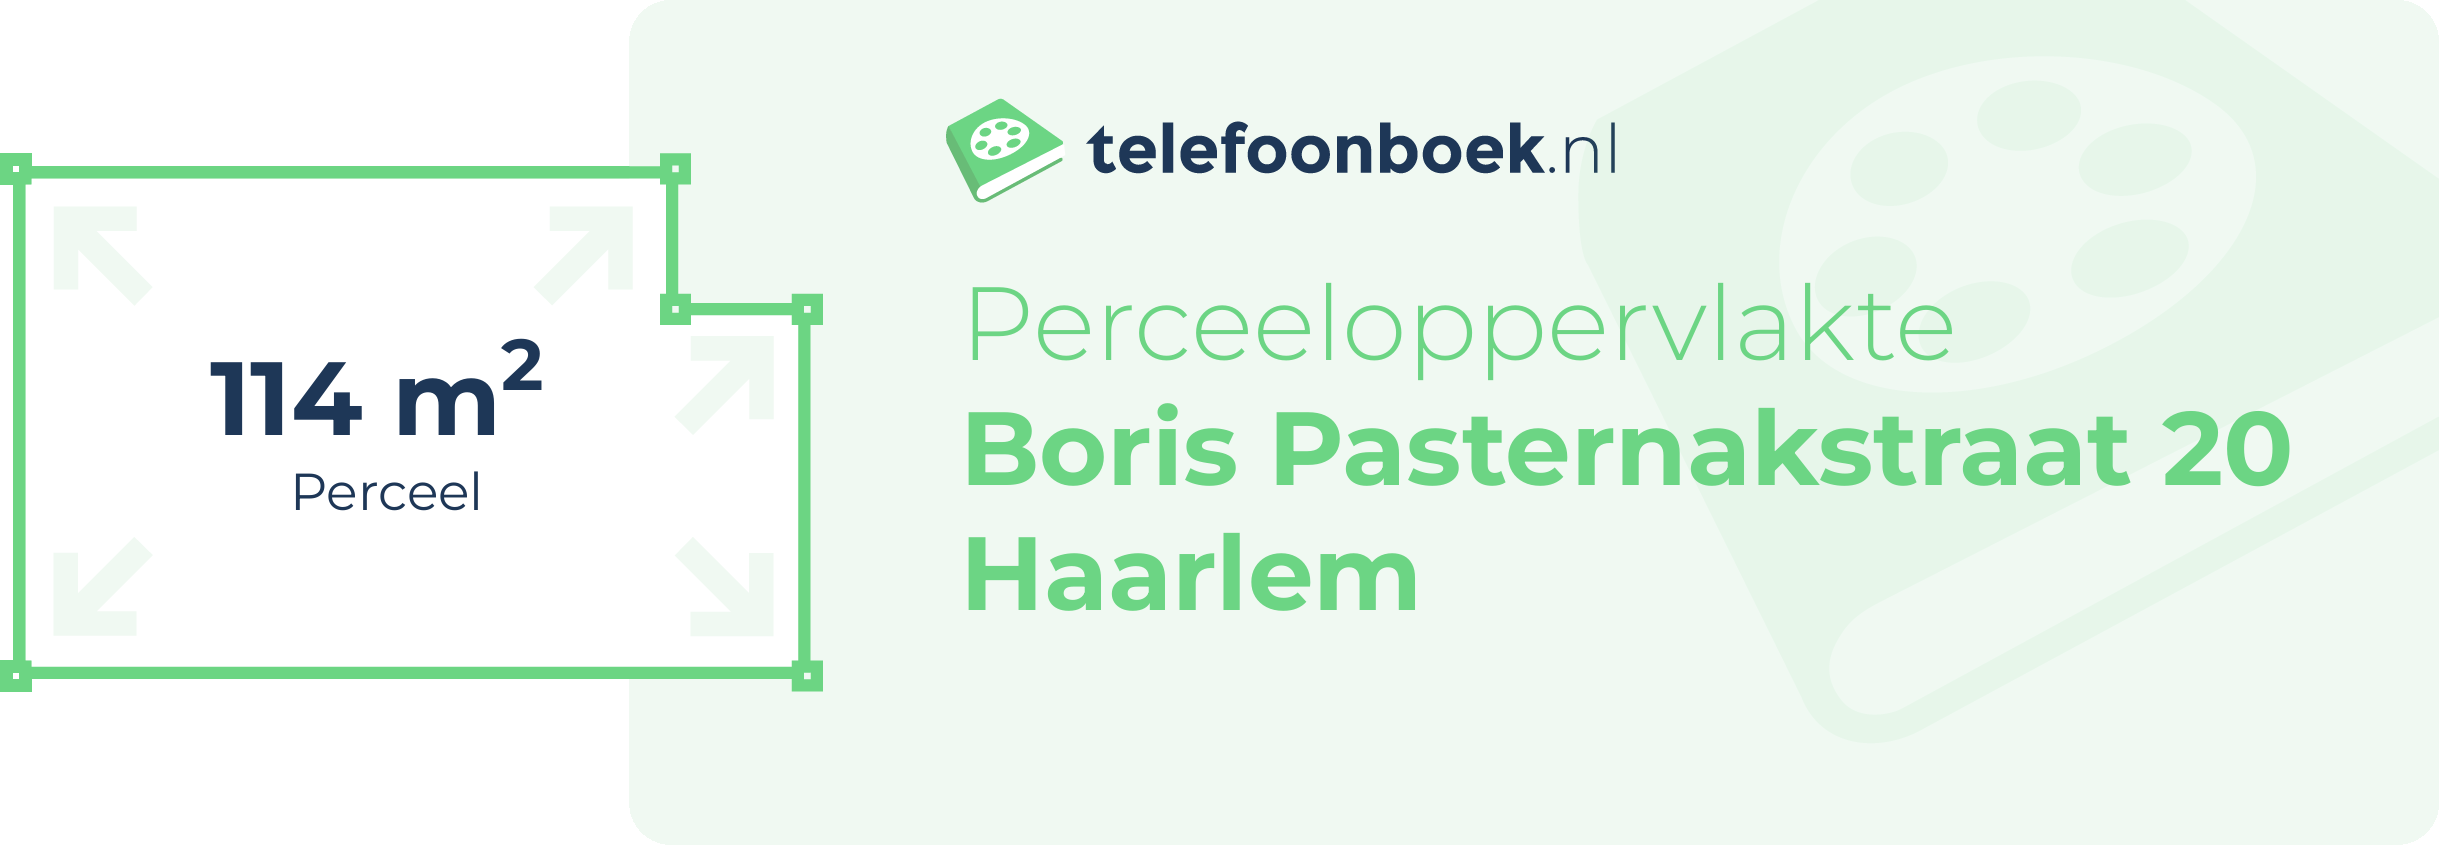 Perceeloppervlakte Boris Pasternakstraat 20 Haarlem